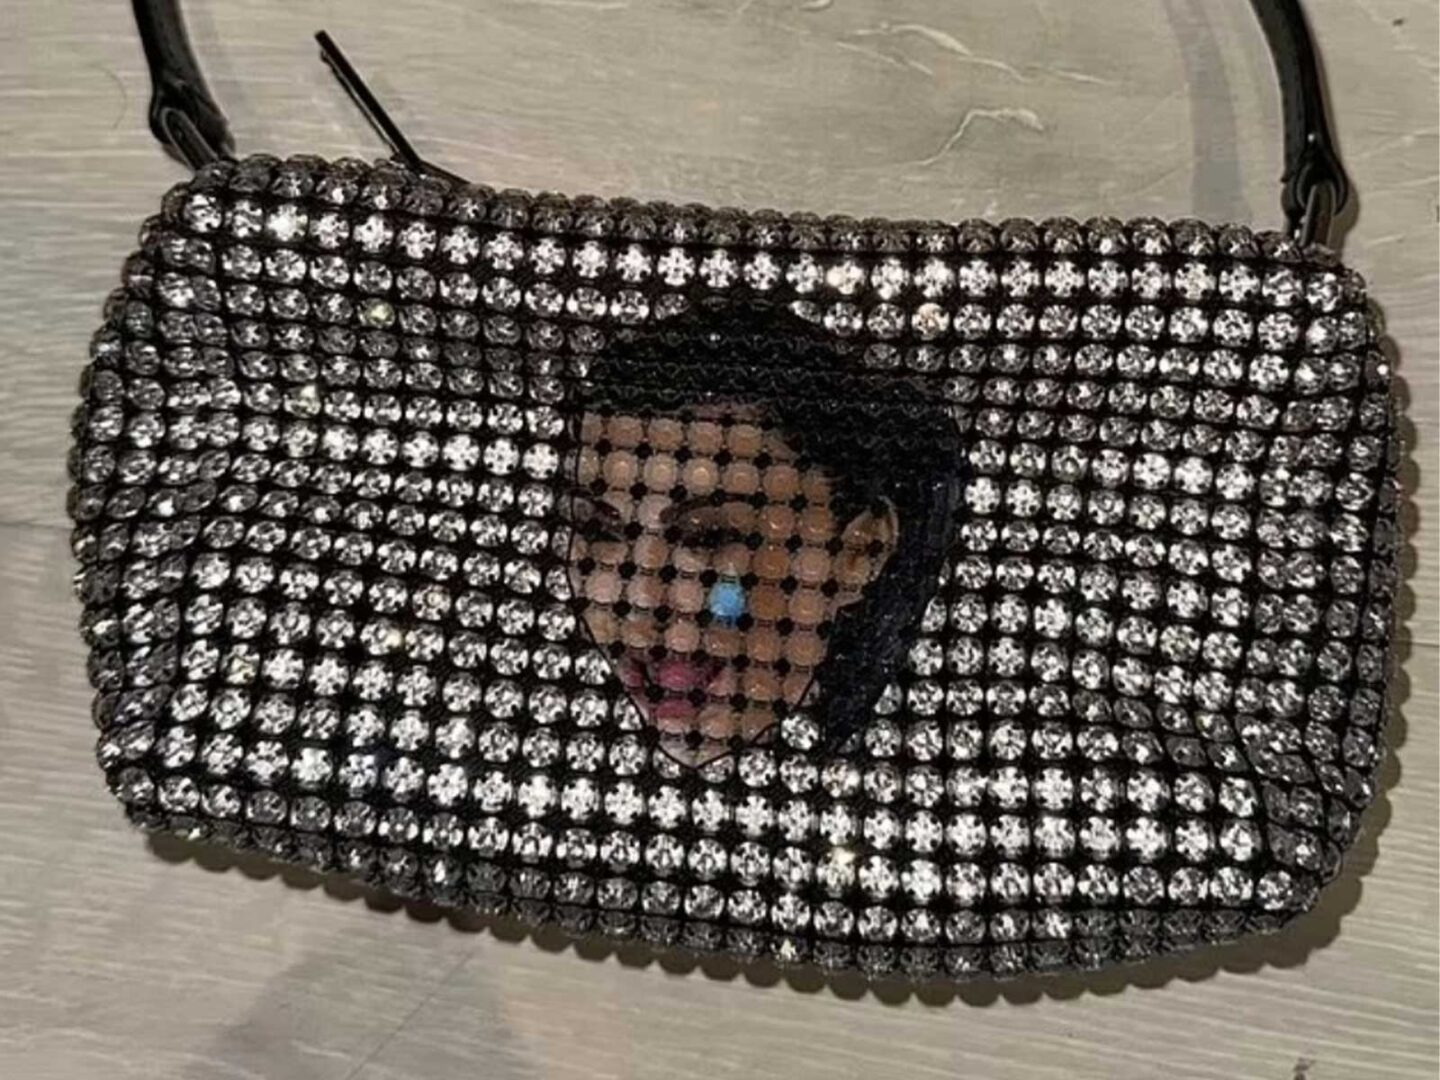 Alexander Wang gives North West a handbag with Kim Kardashian’s face on it